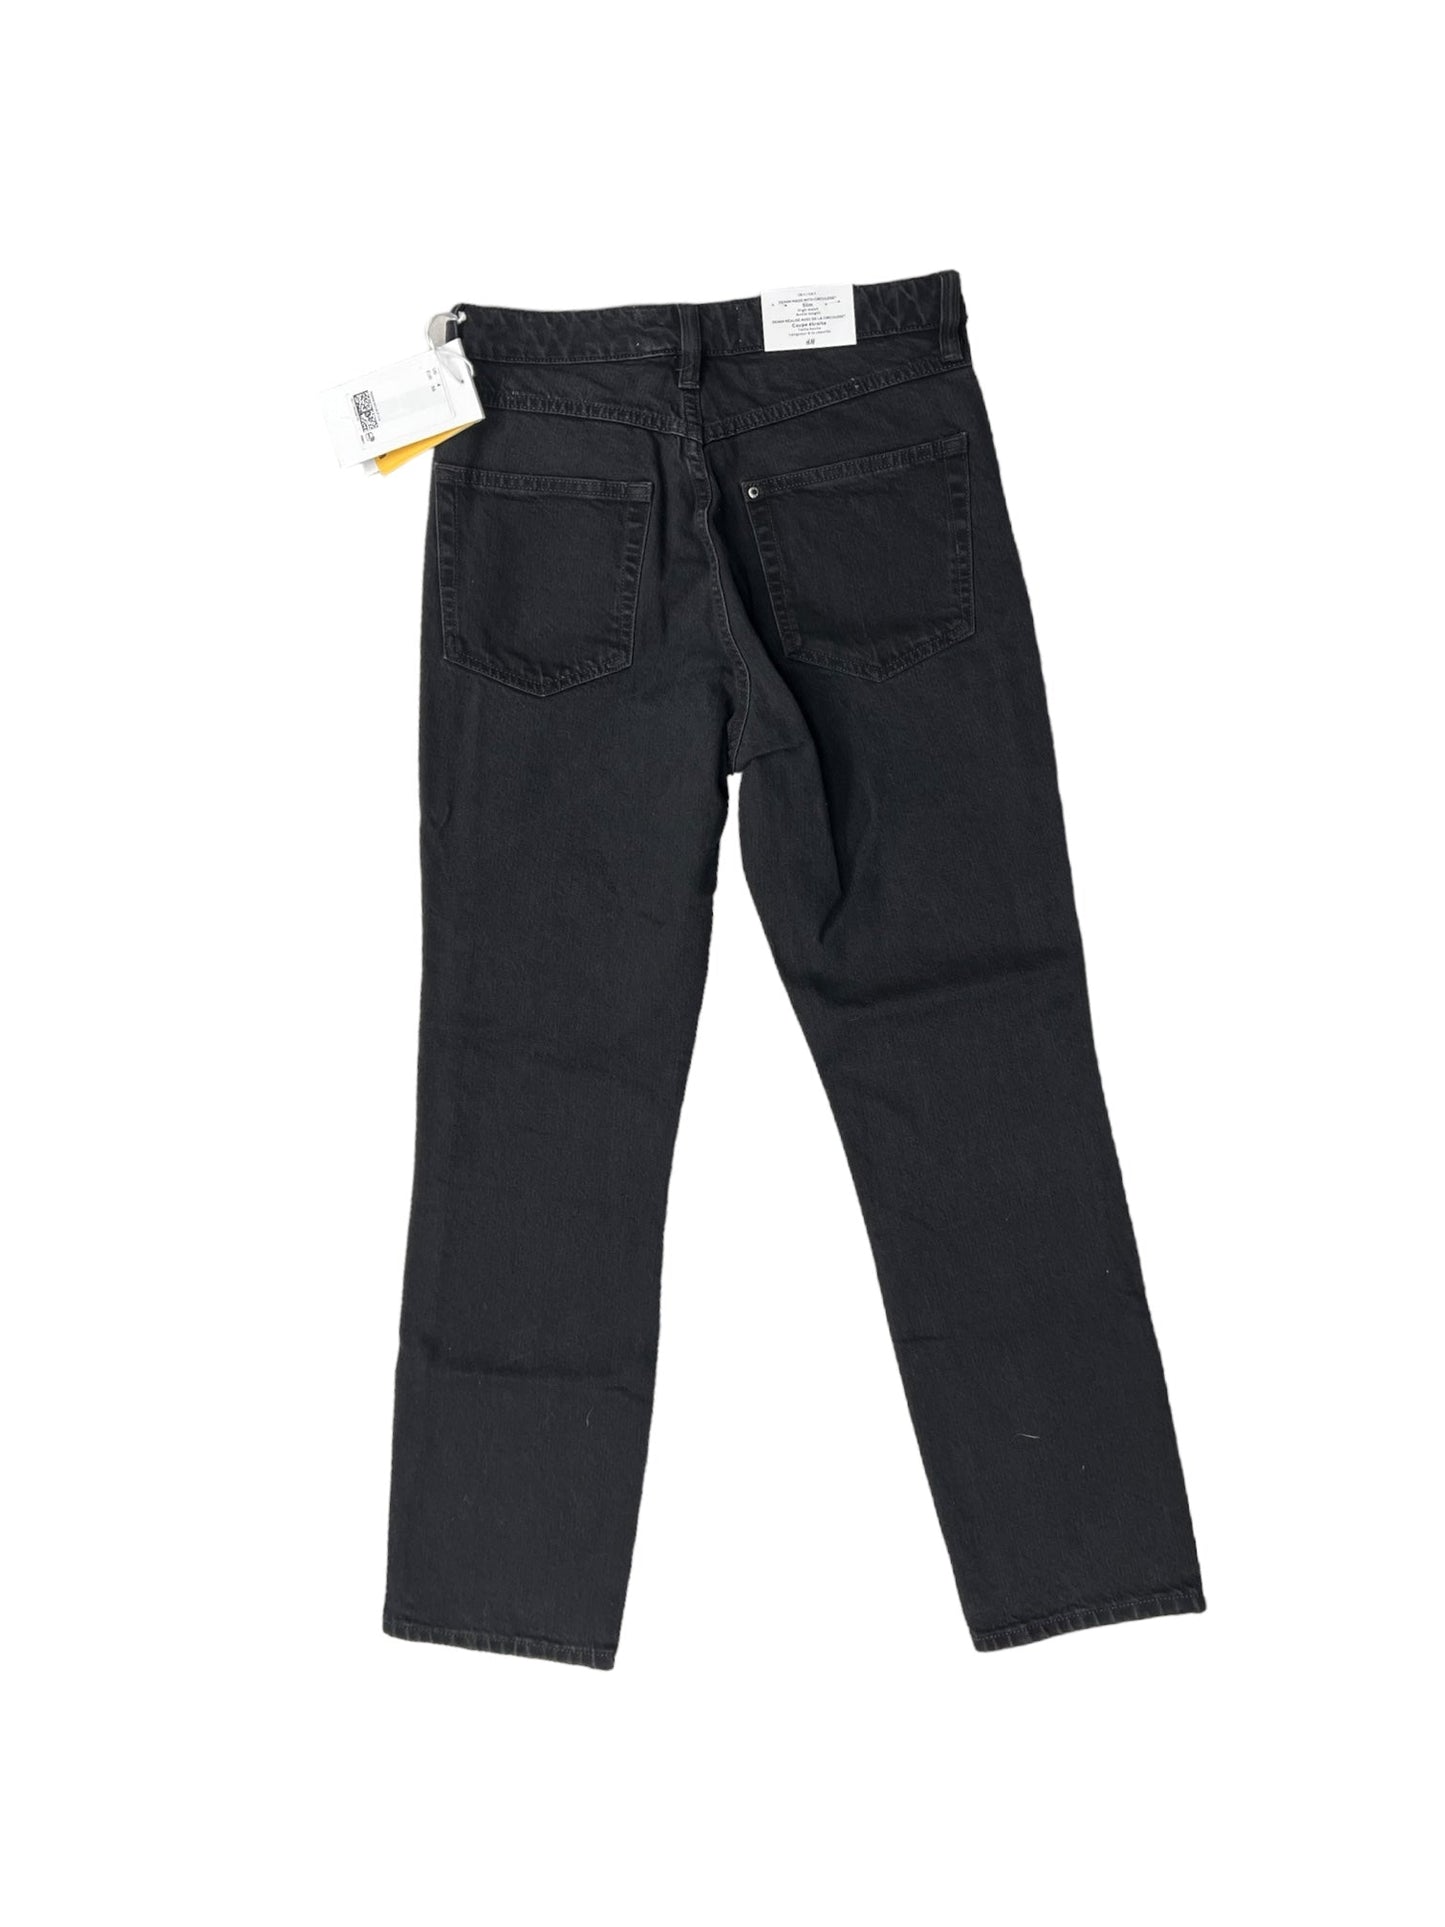 Black Jeans Straight H&m, Size 4